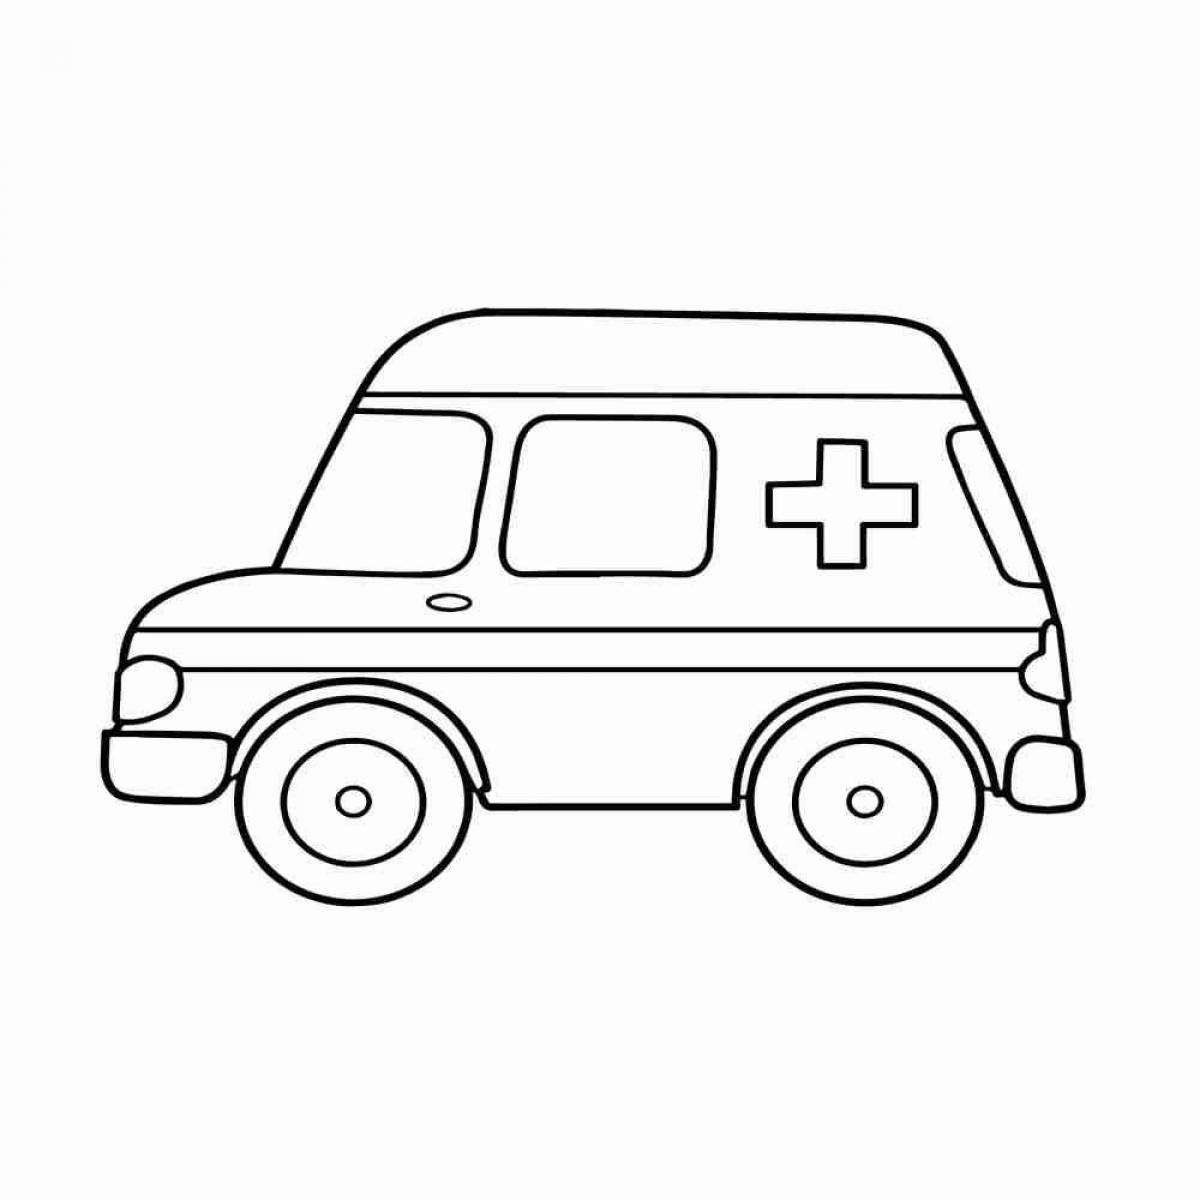 Animated ambulance coloring page